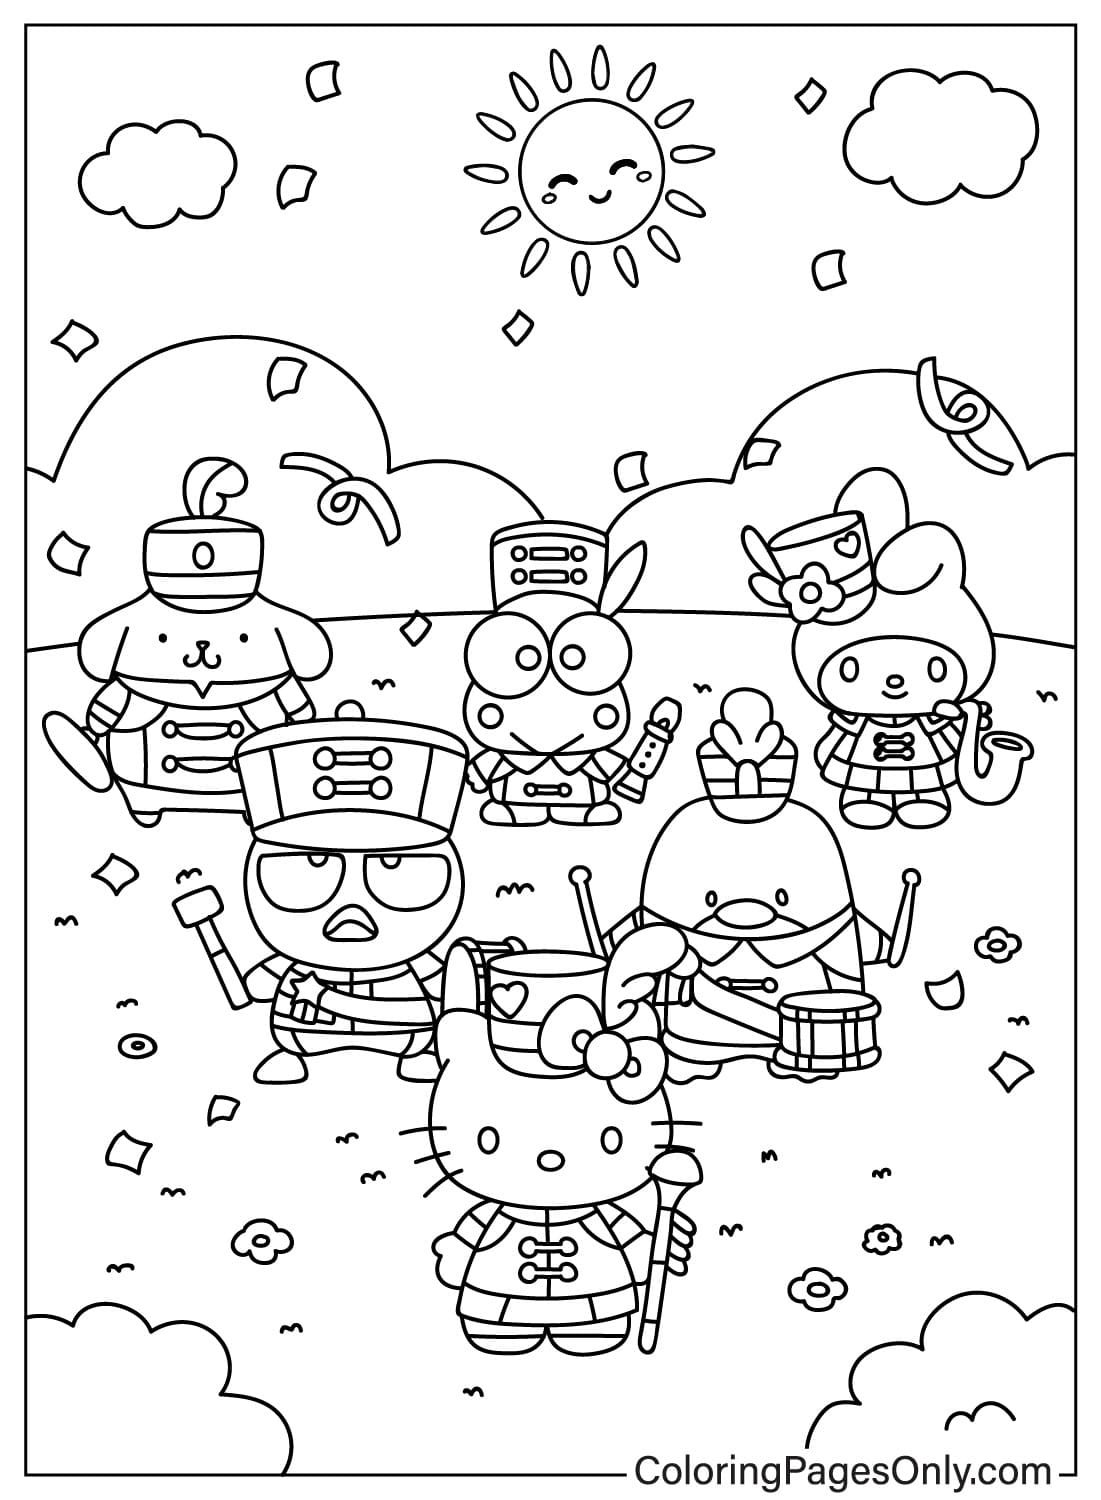 Gratis Sanrio kleurplaat van Hello Kitty